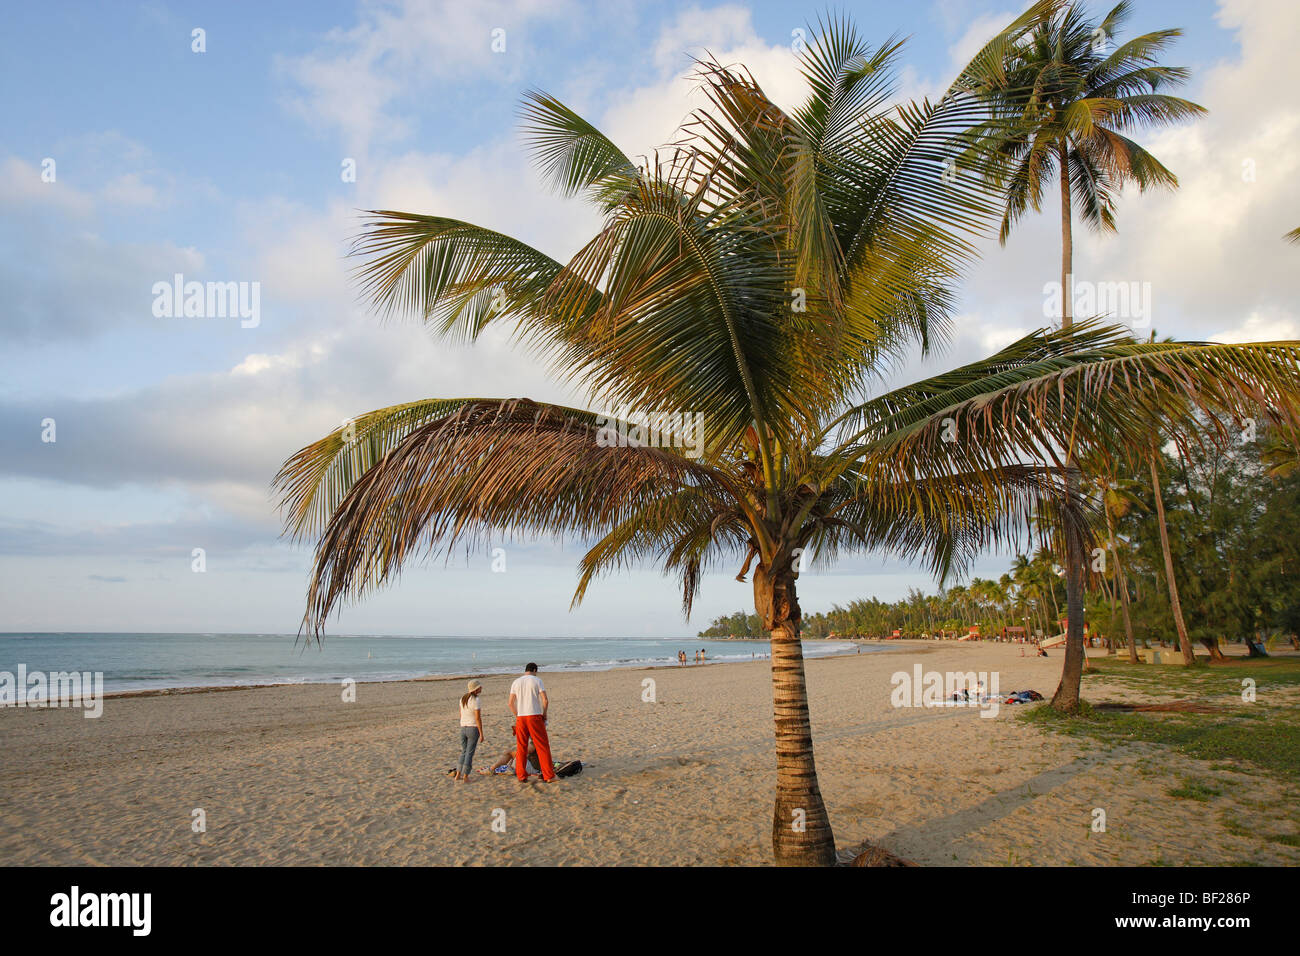 Menschen und Palmen Bäume am Strand unter bewölktem Himmel Luquillo, Puerto Rico, Karibik, Amerika Stockfoto